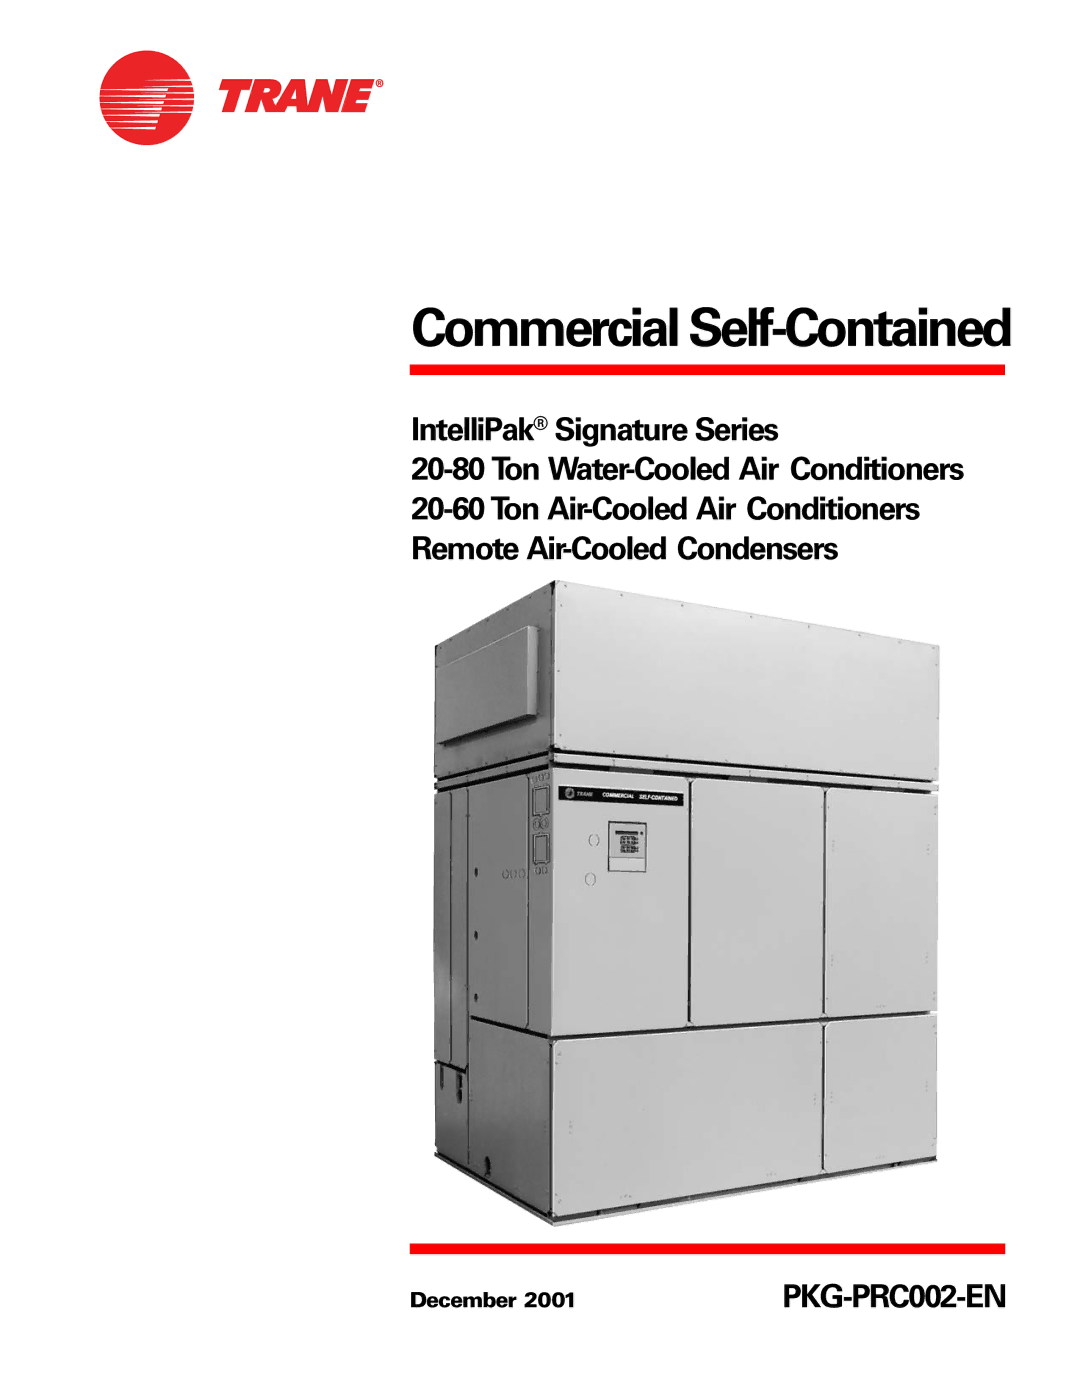 Trane PKG-PRC002-EN manual Commercial Self-Contained, December 